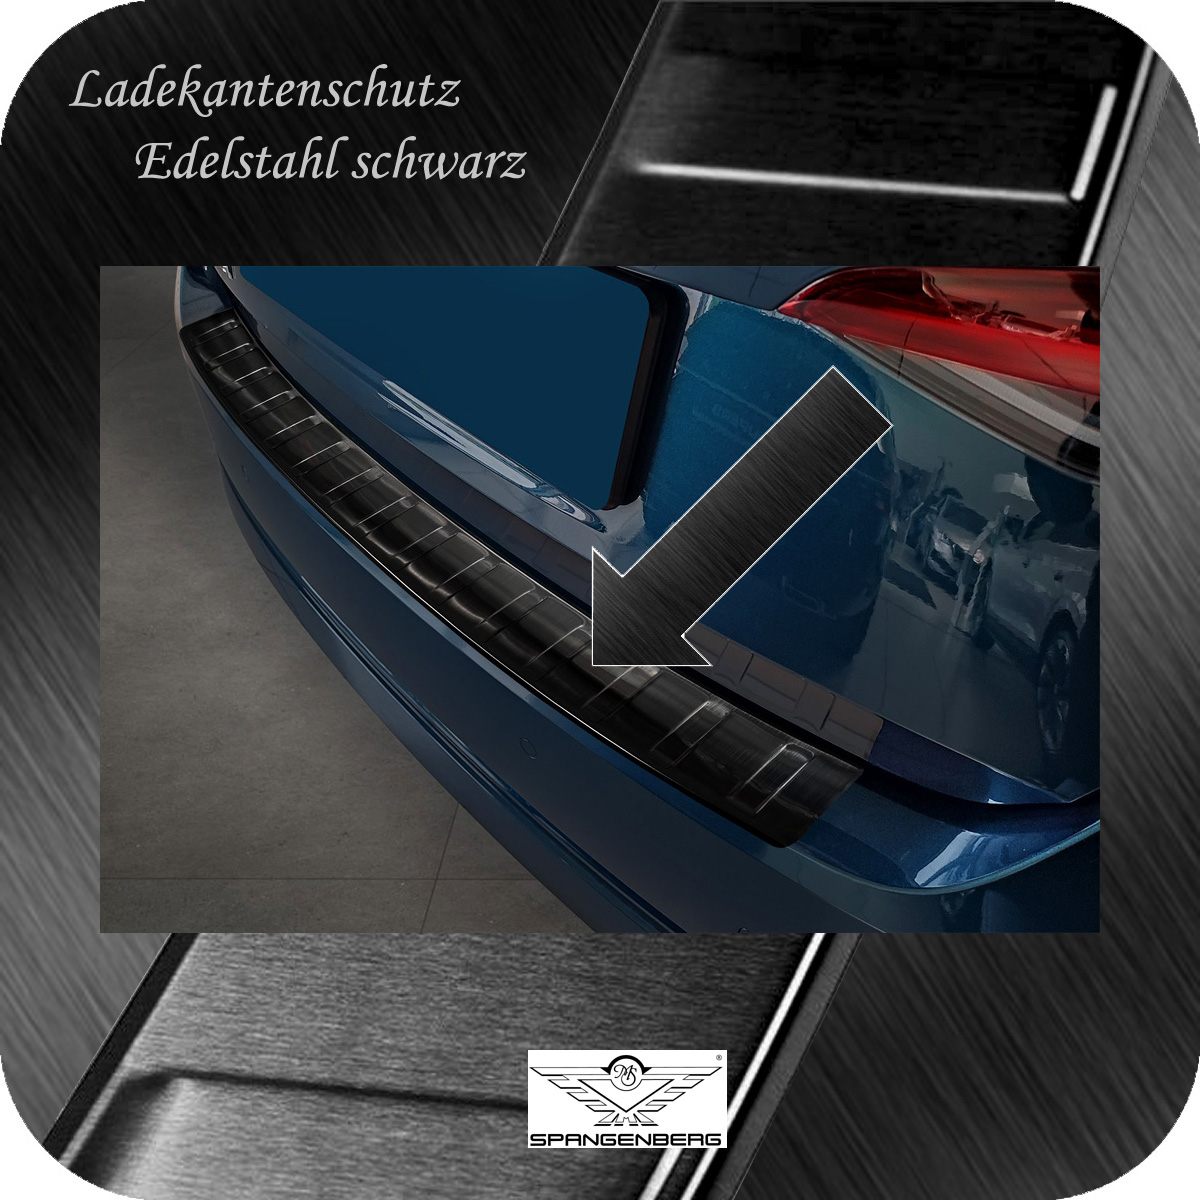 Ladekantenschutz Edelstahl schwarz für Skoda Octavia IV liftback 11.19- 3245251